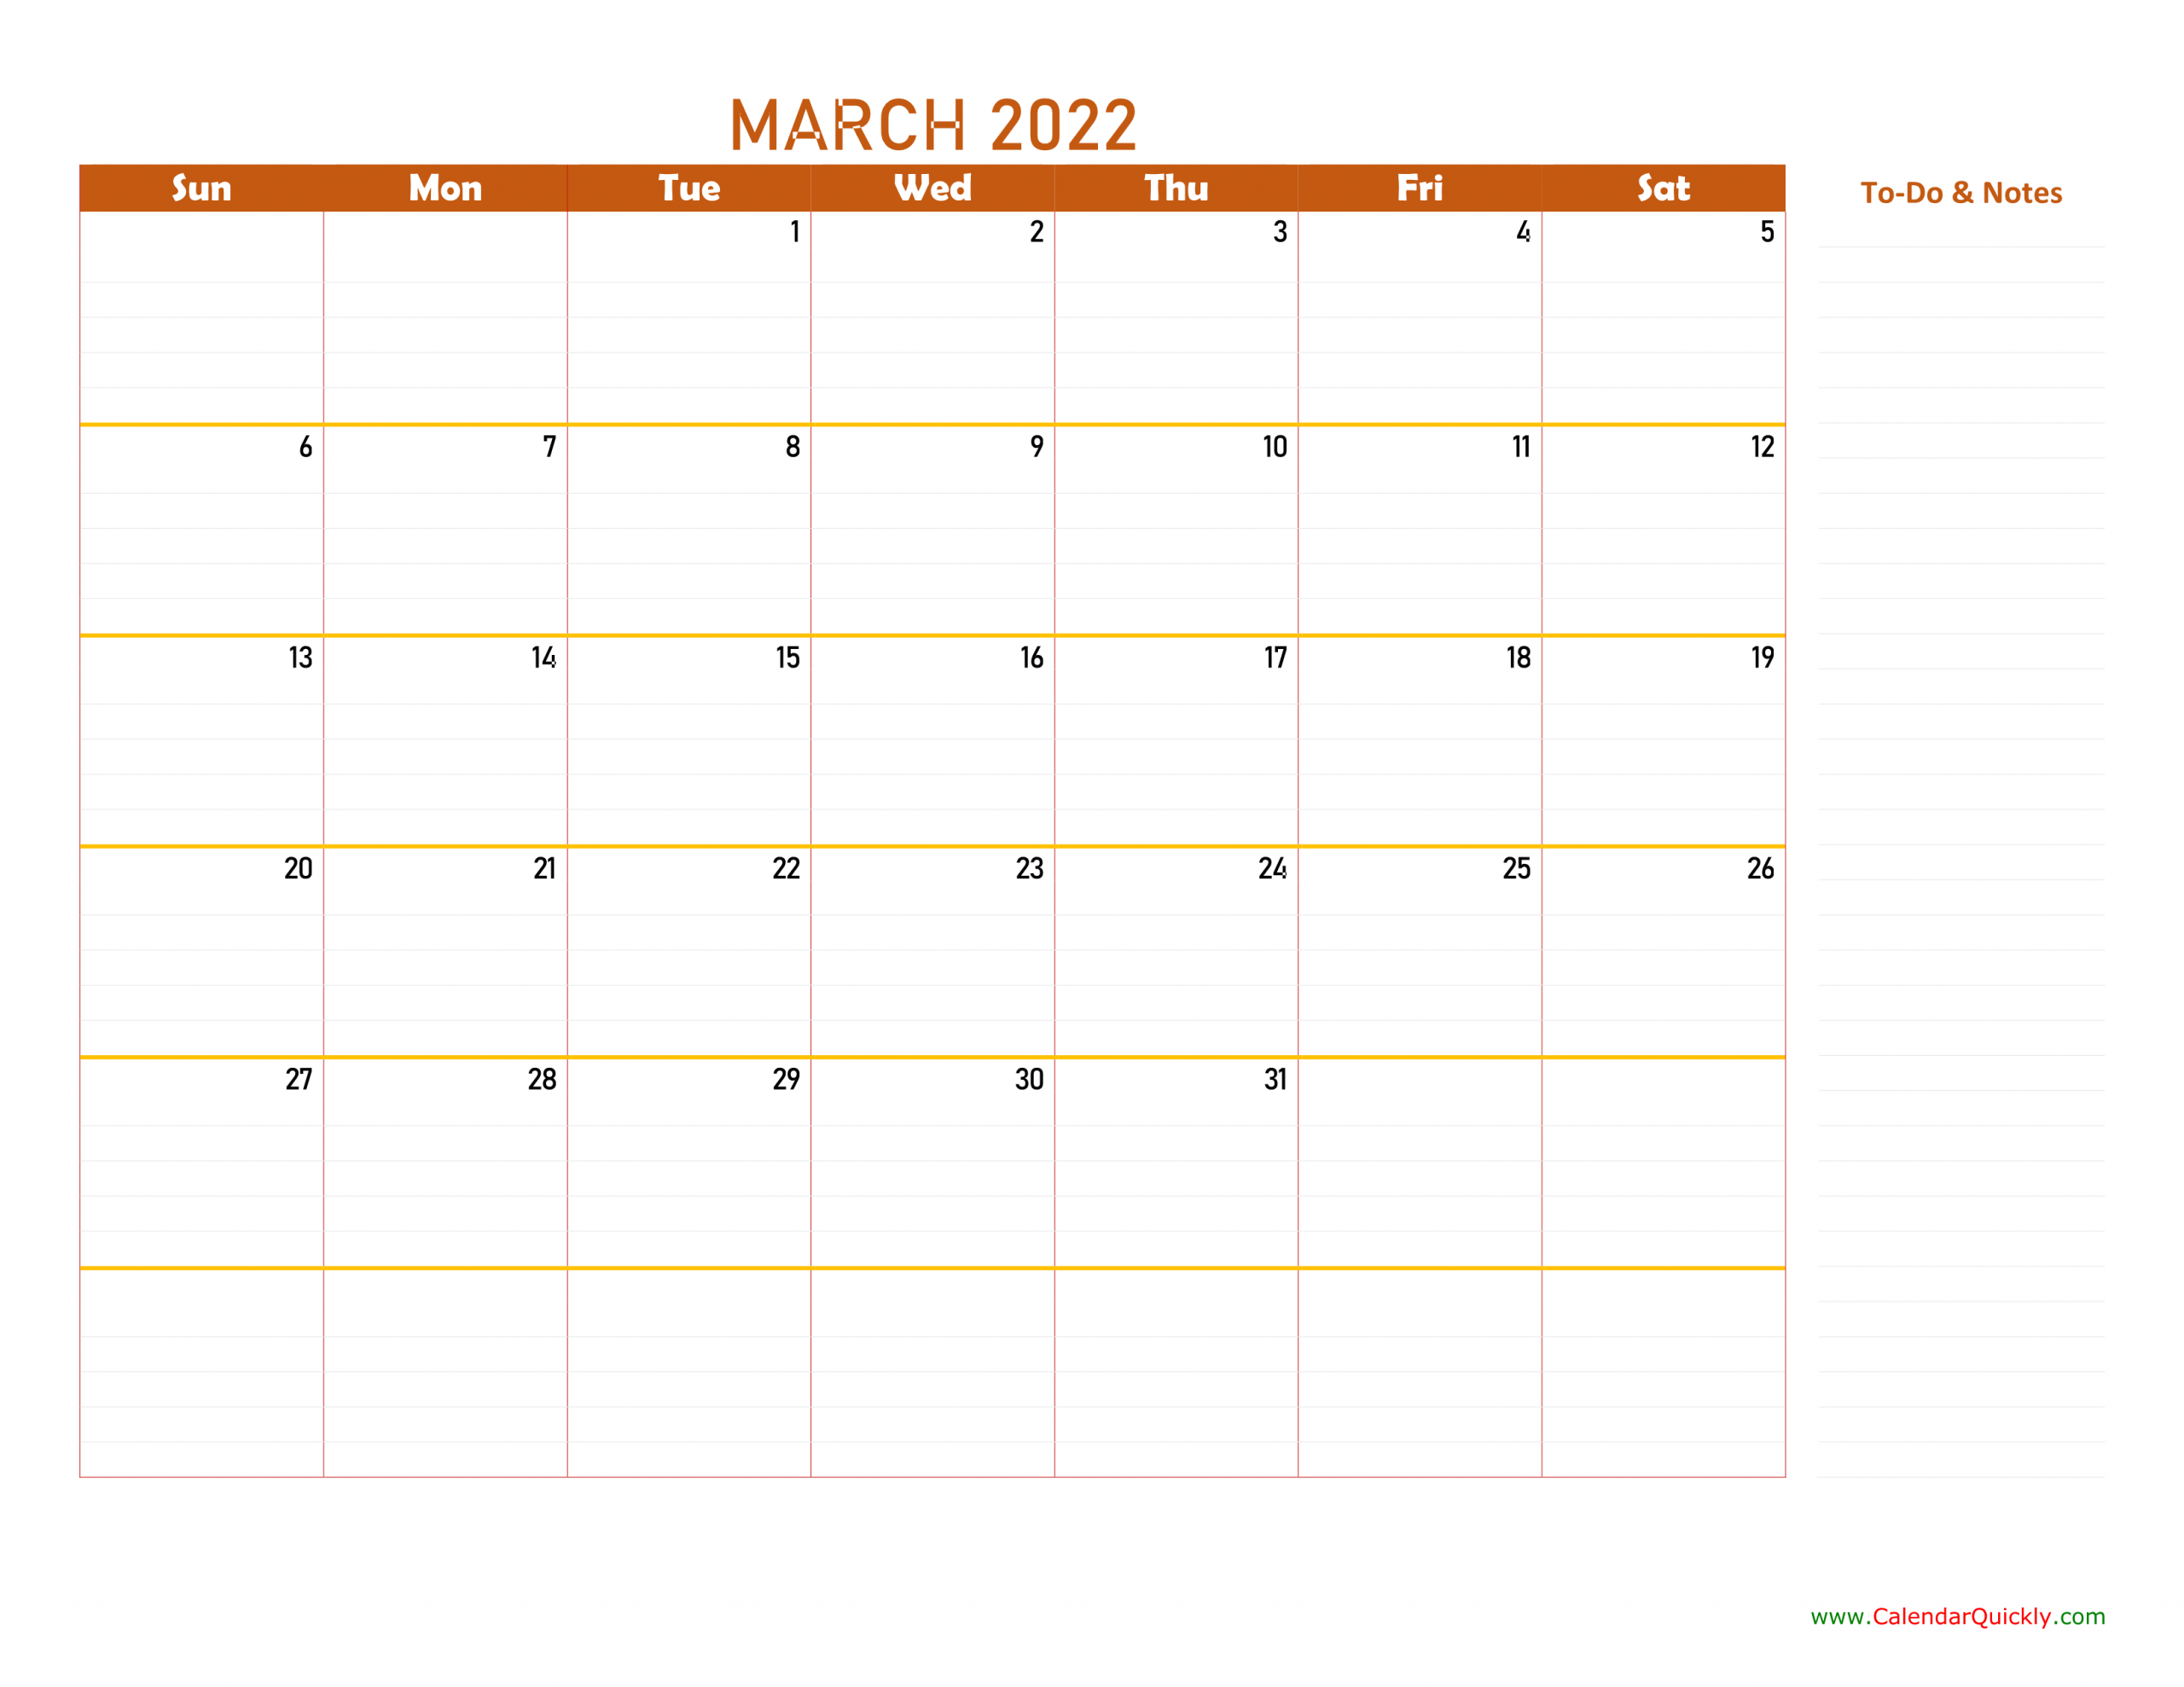 March 2022 Calendar | Calendar Quickly